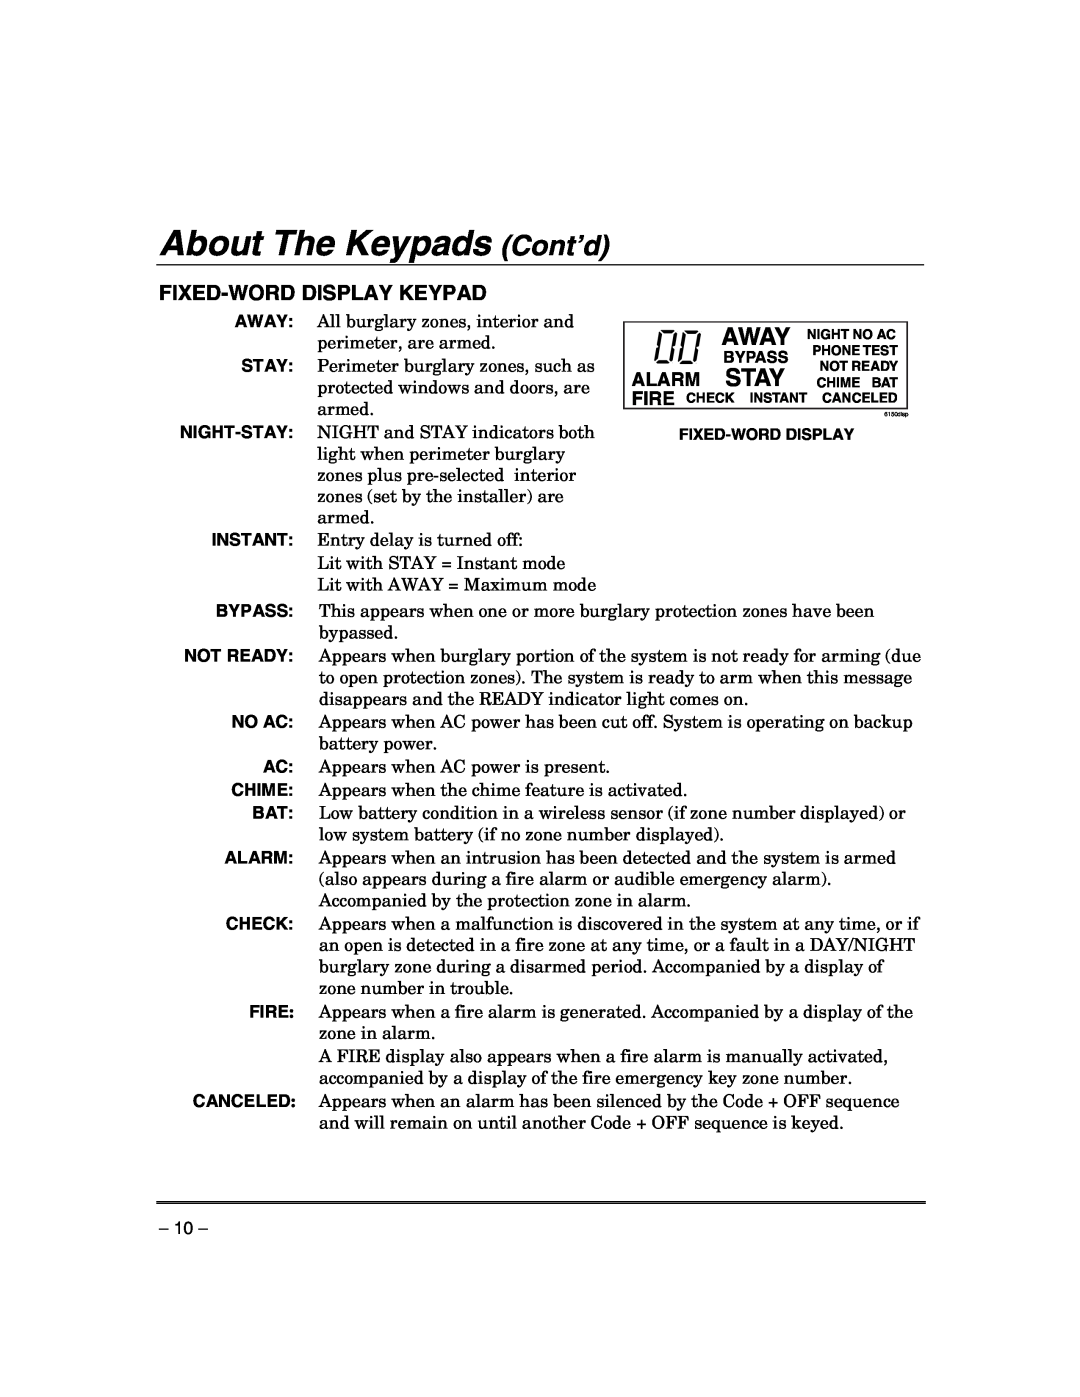 Honeywell VISTA-21IPSIA manual About The Keypads Cont’d, Fixed-Worddisplay Keypad 